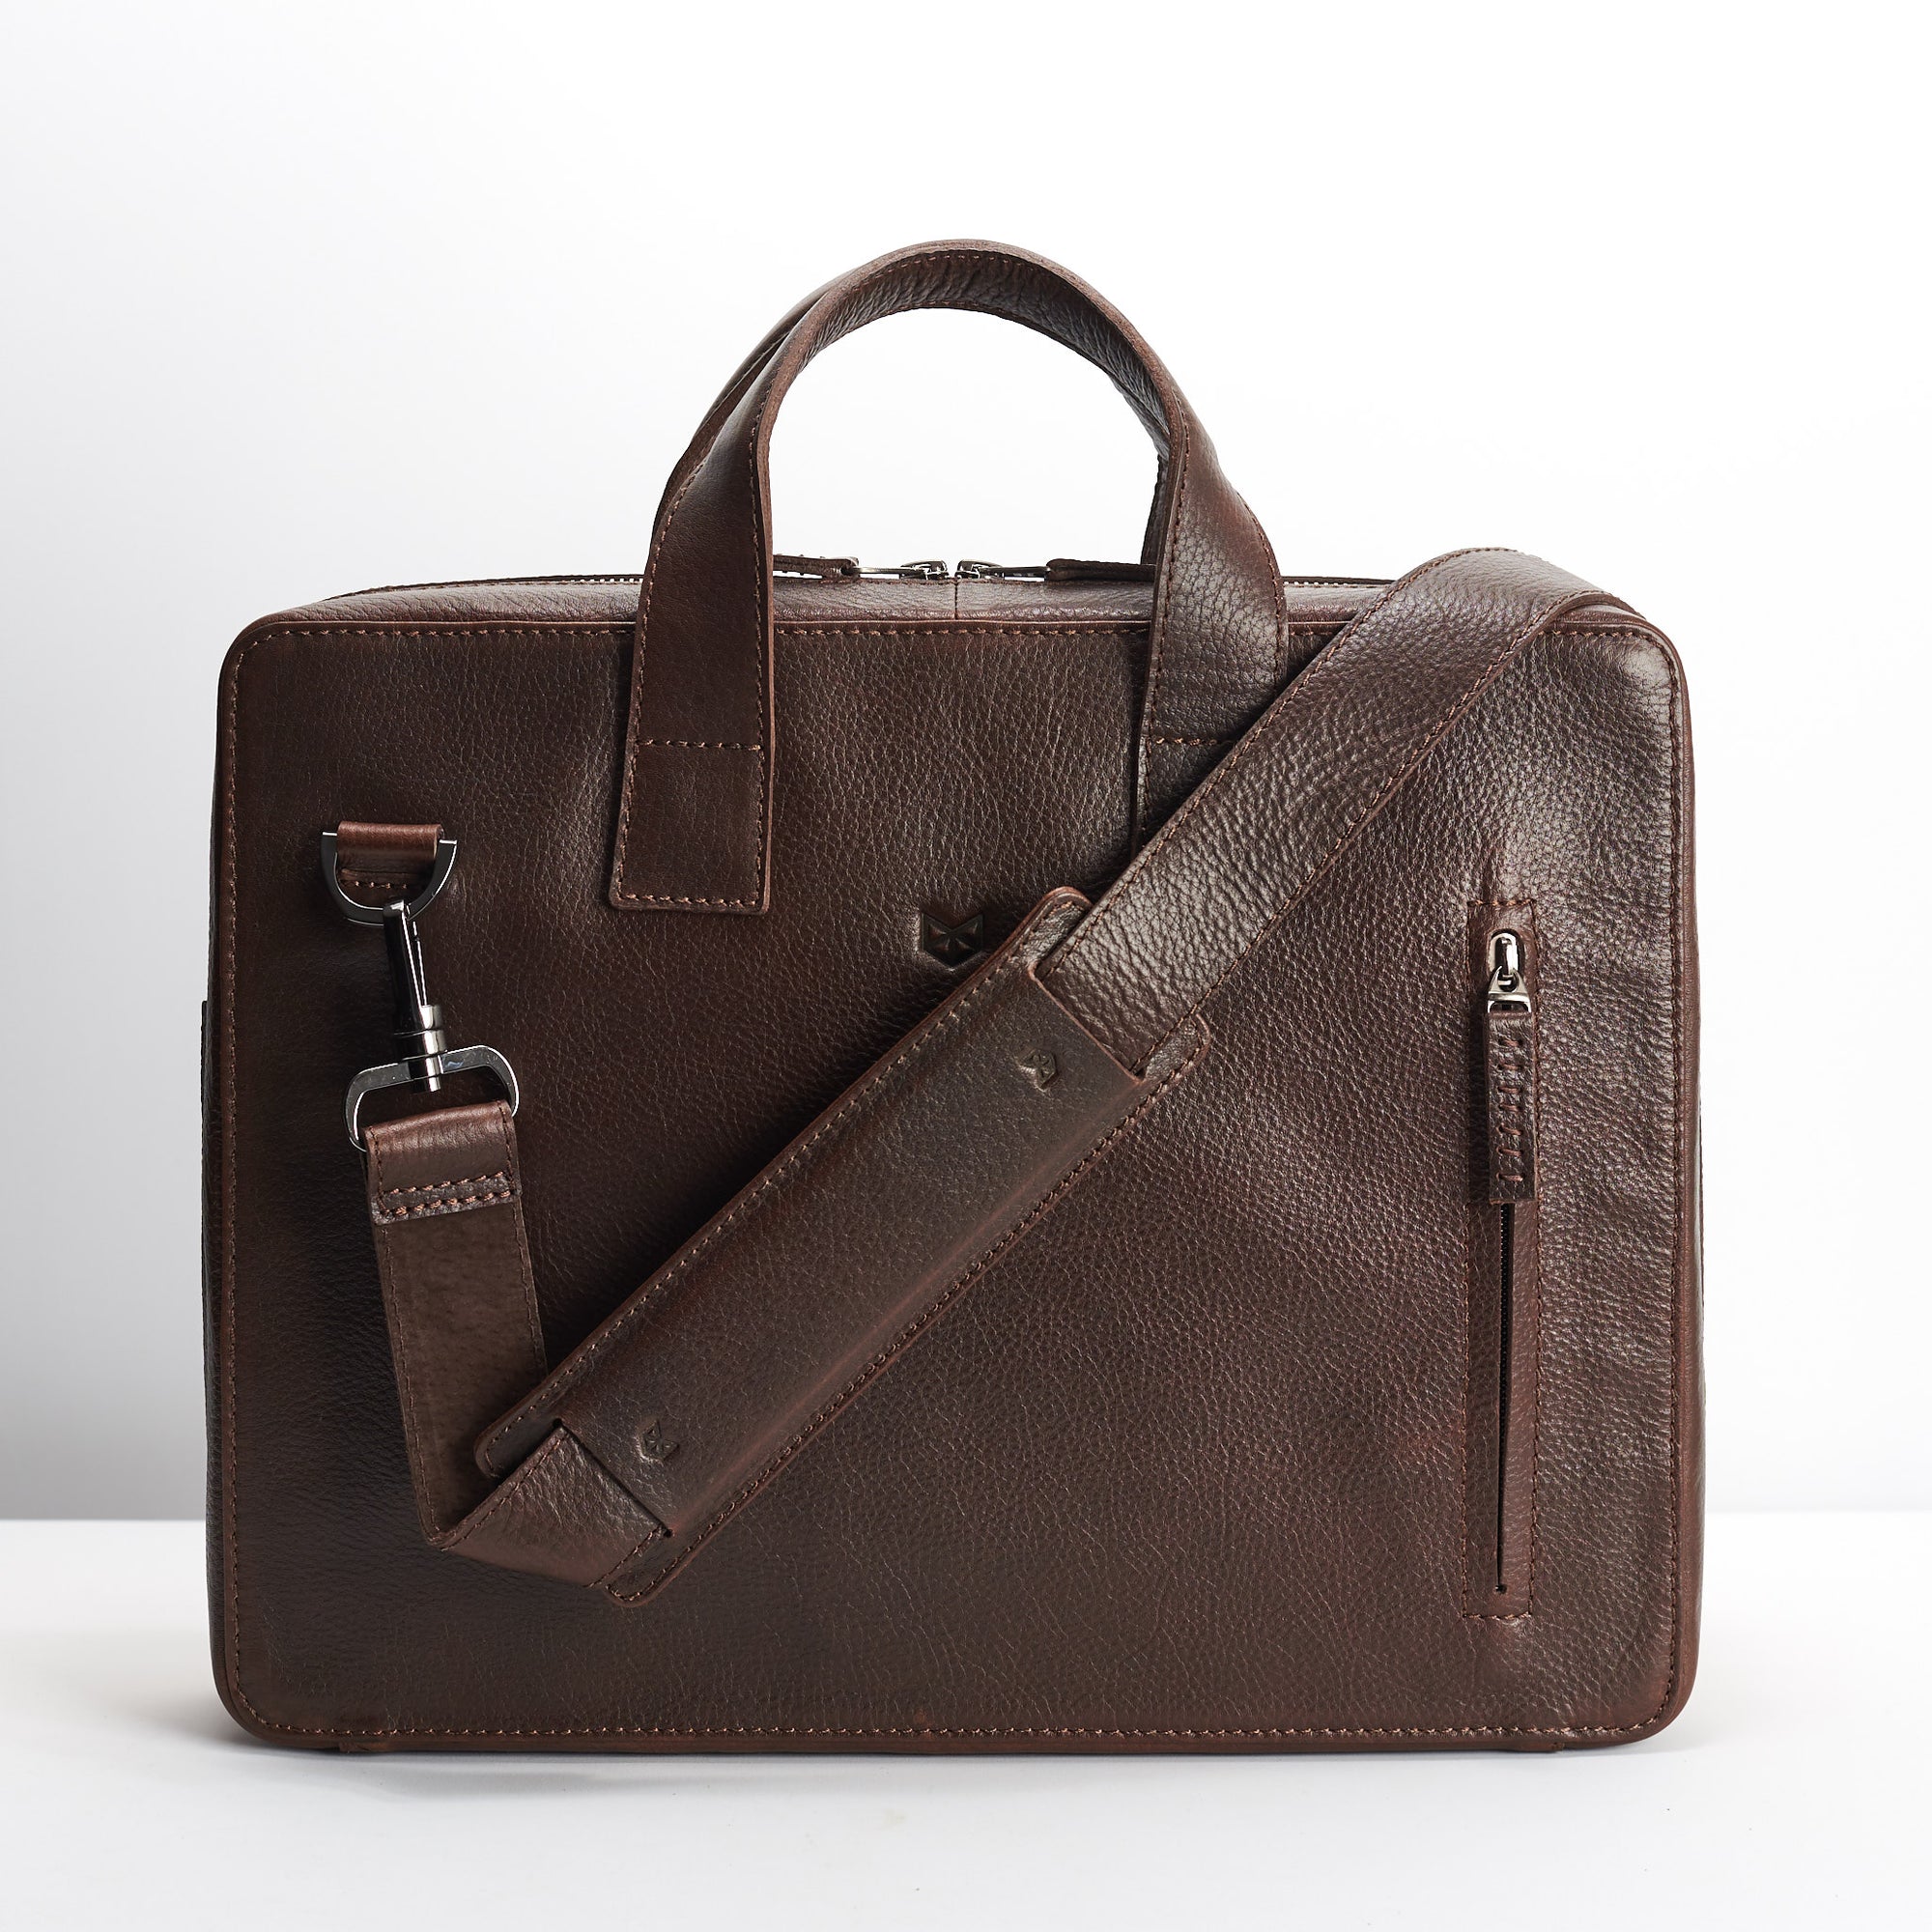 Extra padded shoulder strap. Dark brown leather briefcase, Macbook Pro 13inch 15inch inside pocket